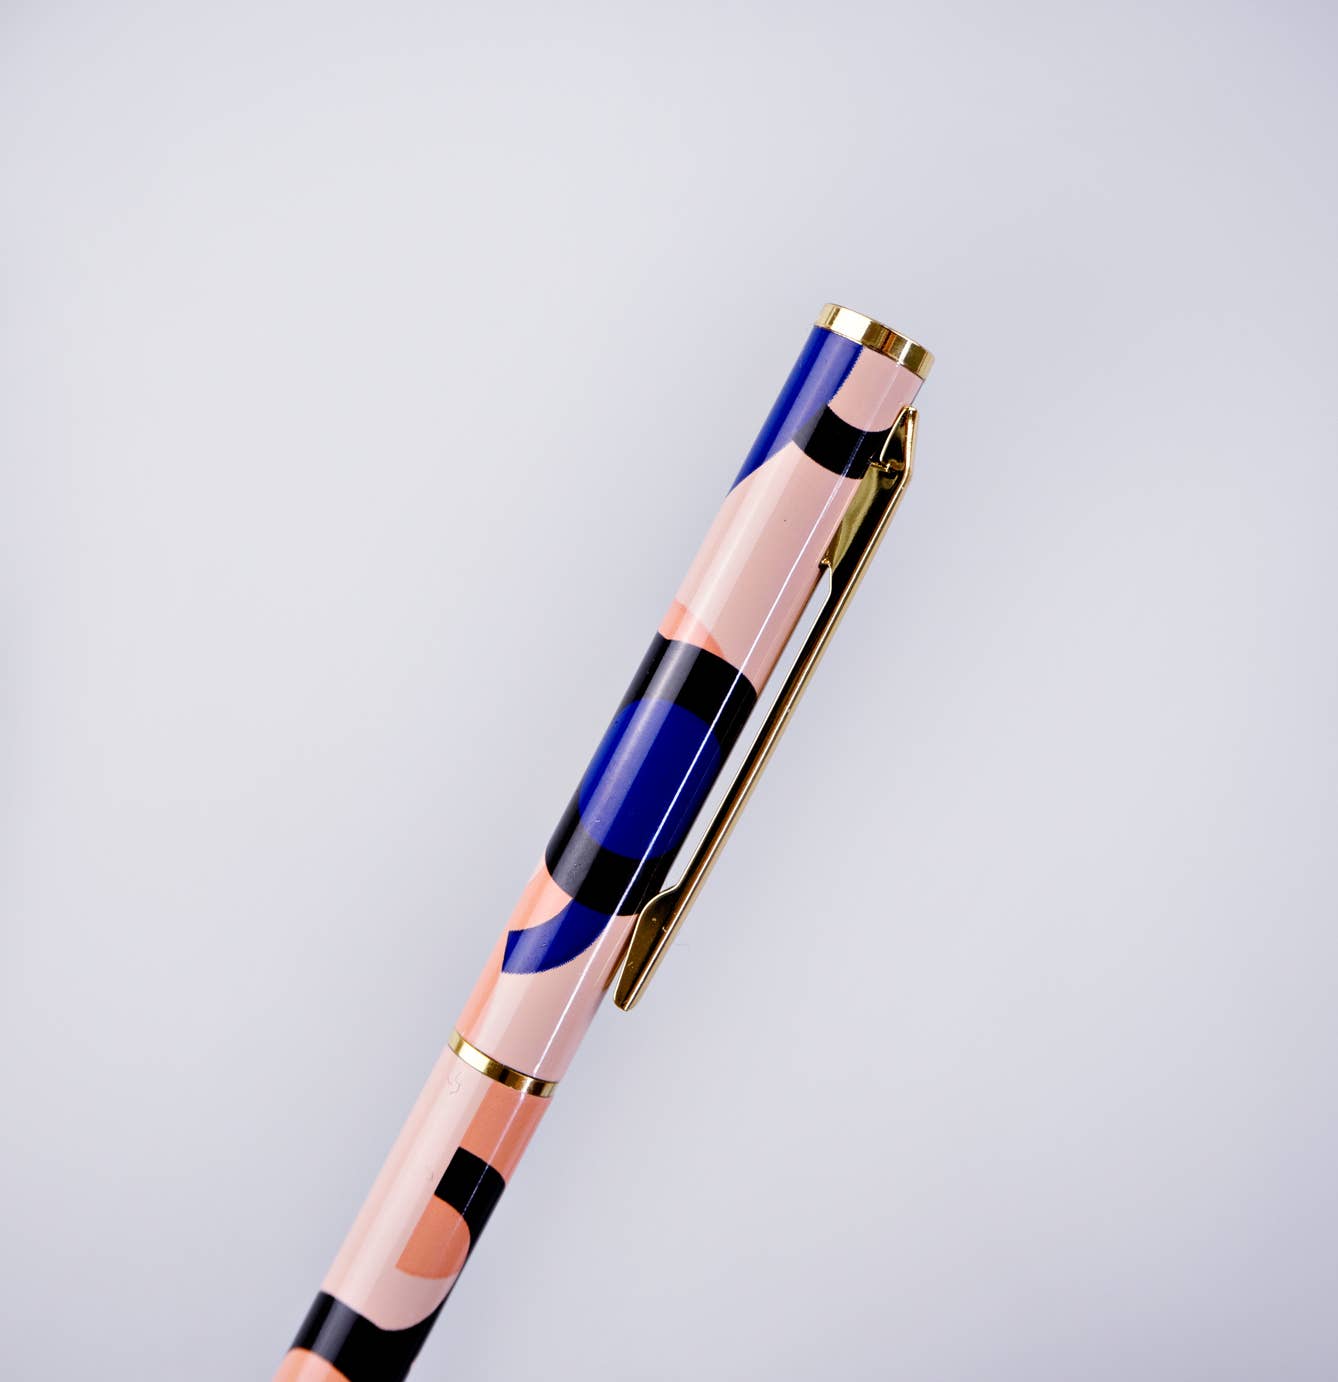 The Completist Tokyo Pen